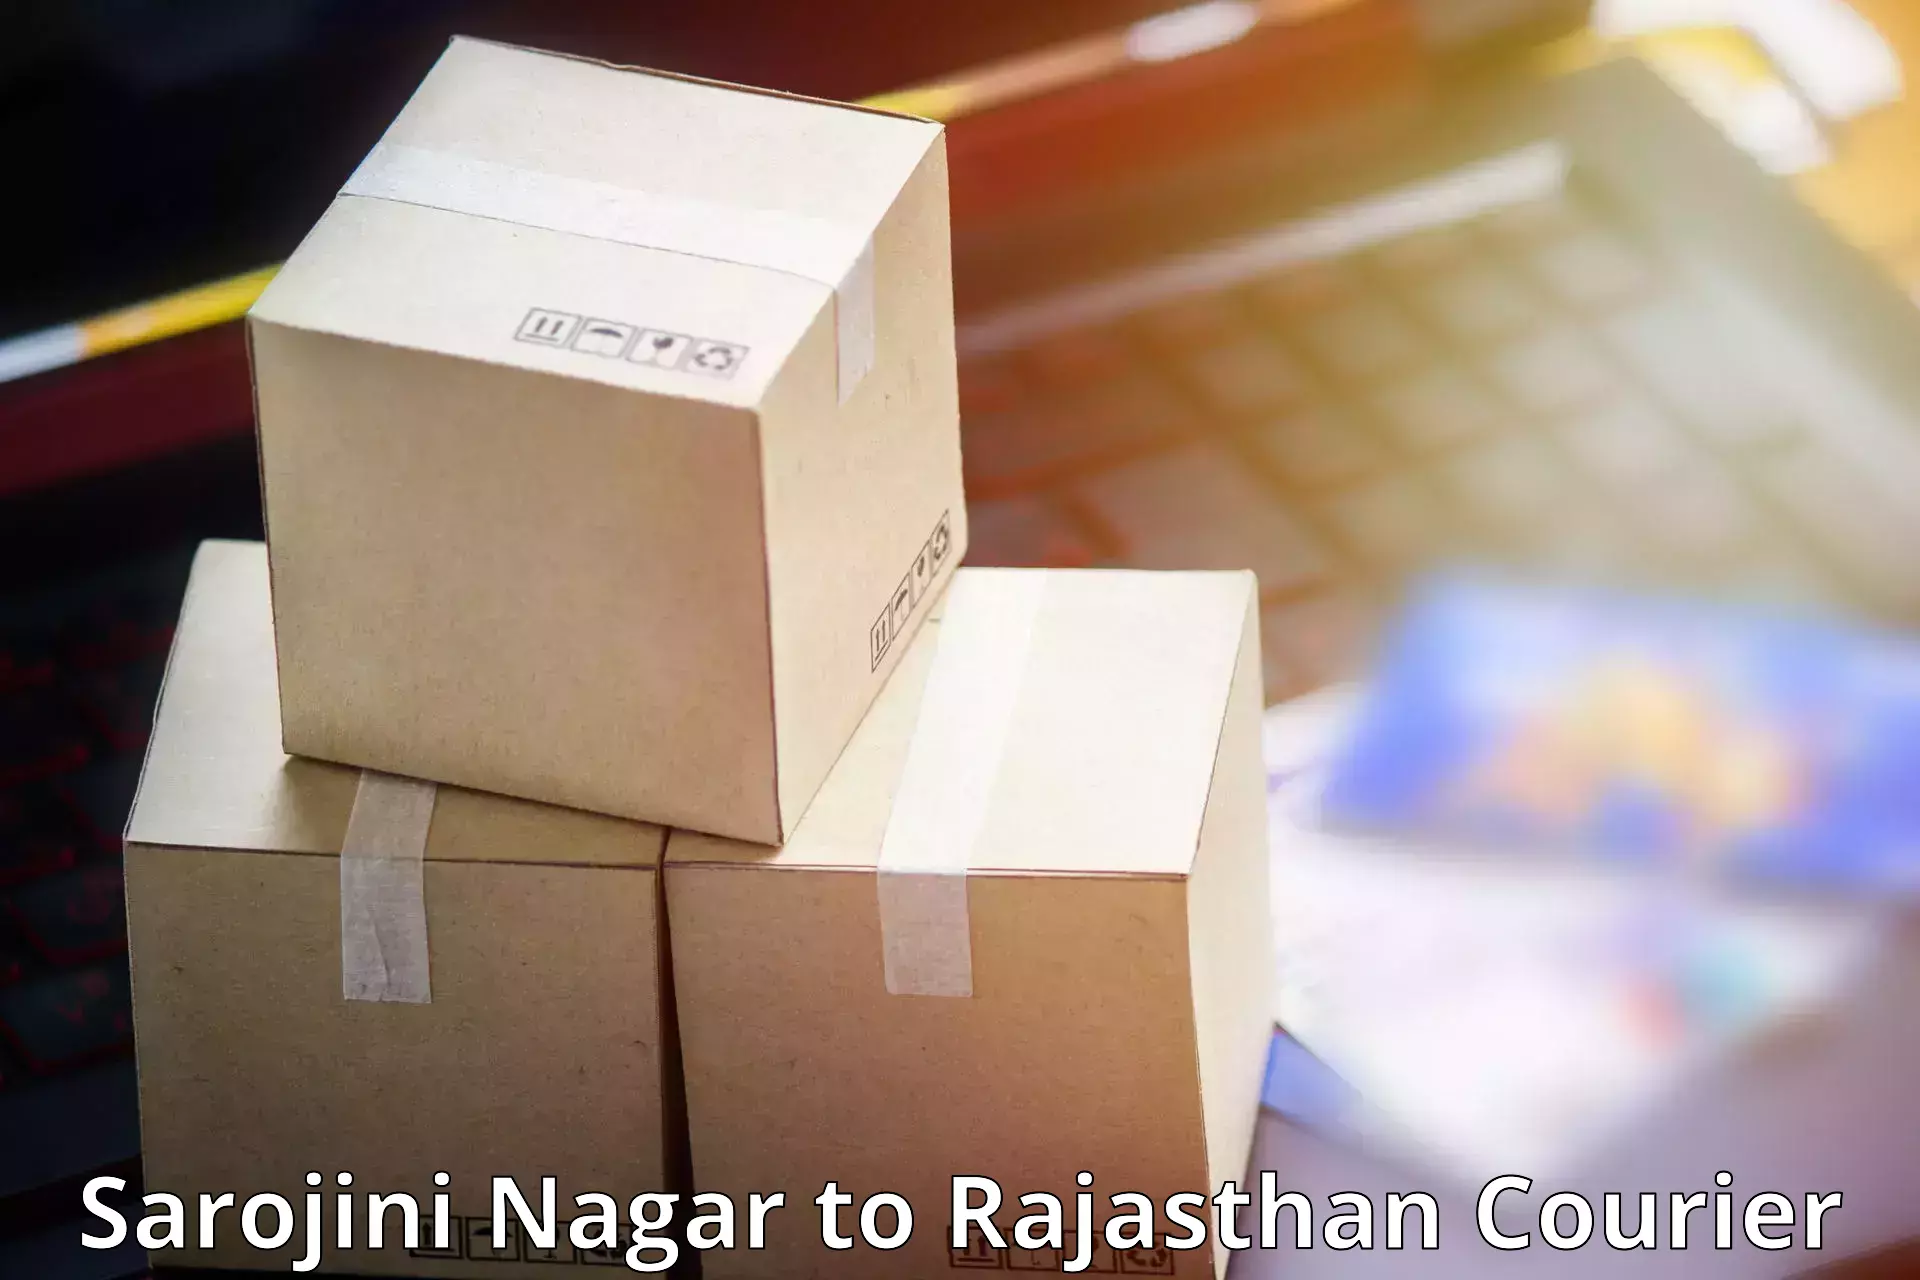 Courier service booking Sarojini Nagar to Neem ka Thana